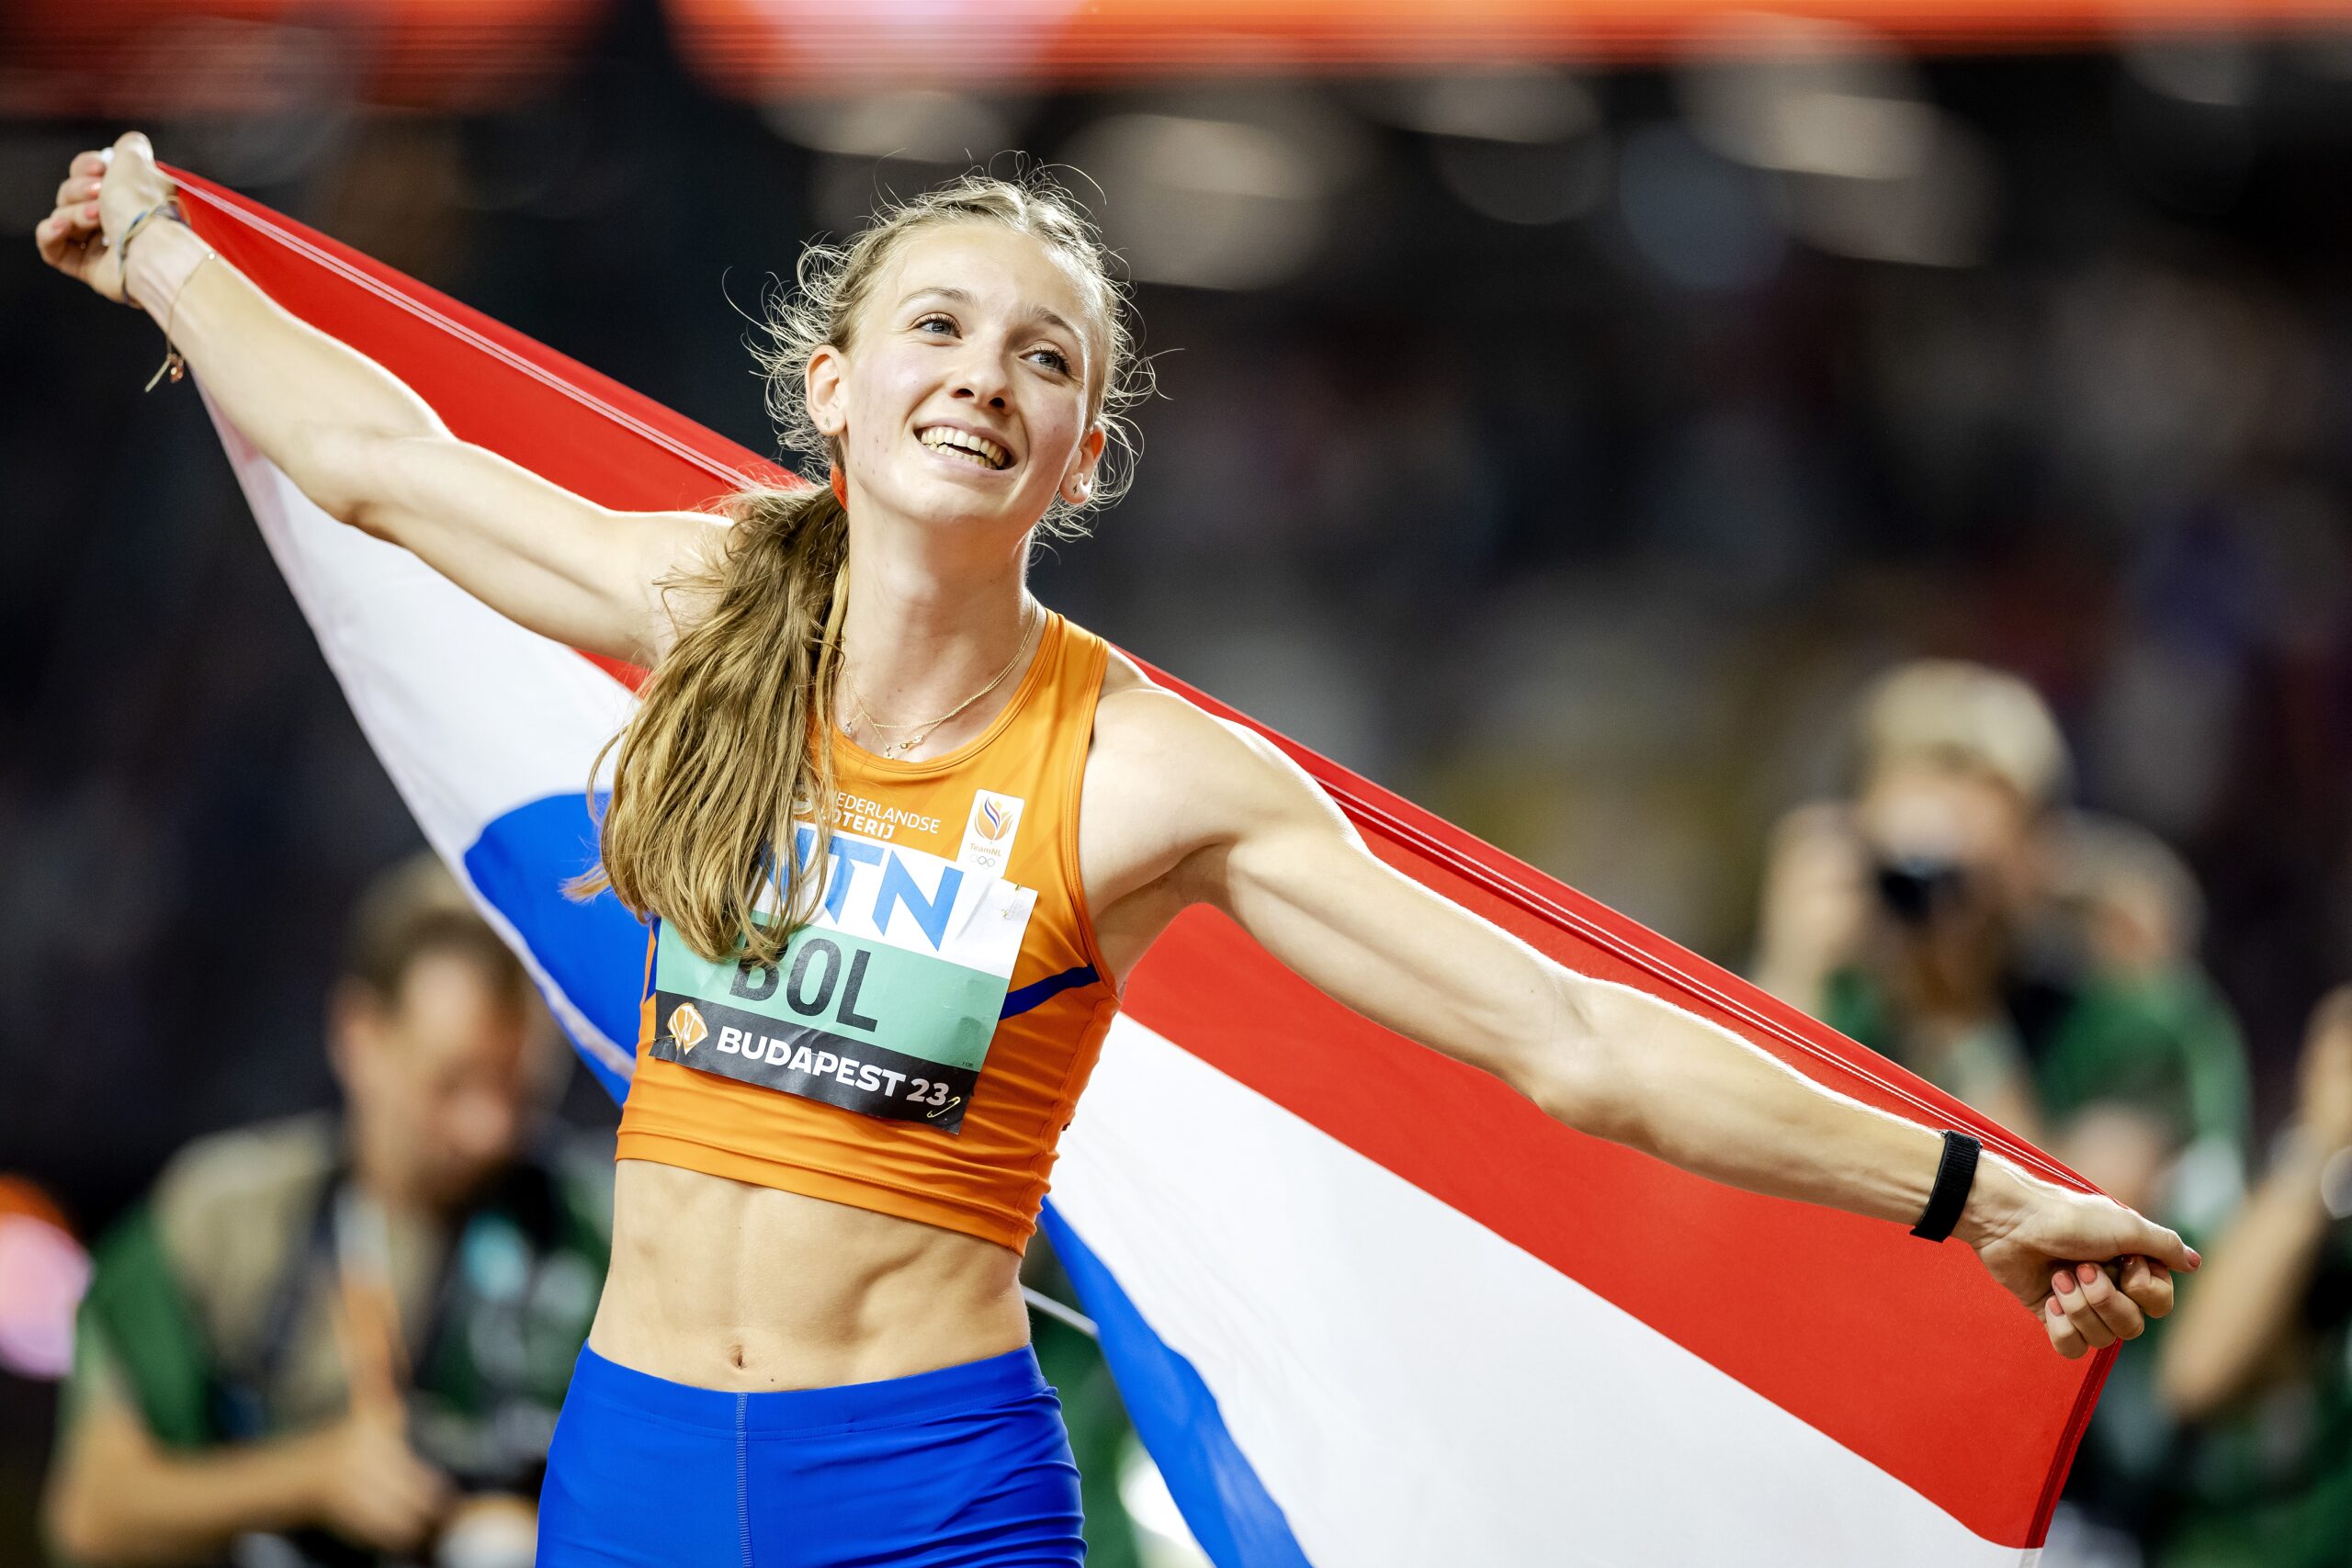 Golden Bol: Femke cruises to the 400m hurdles title - DutchNews.nl